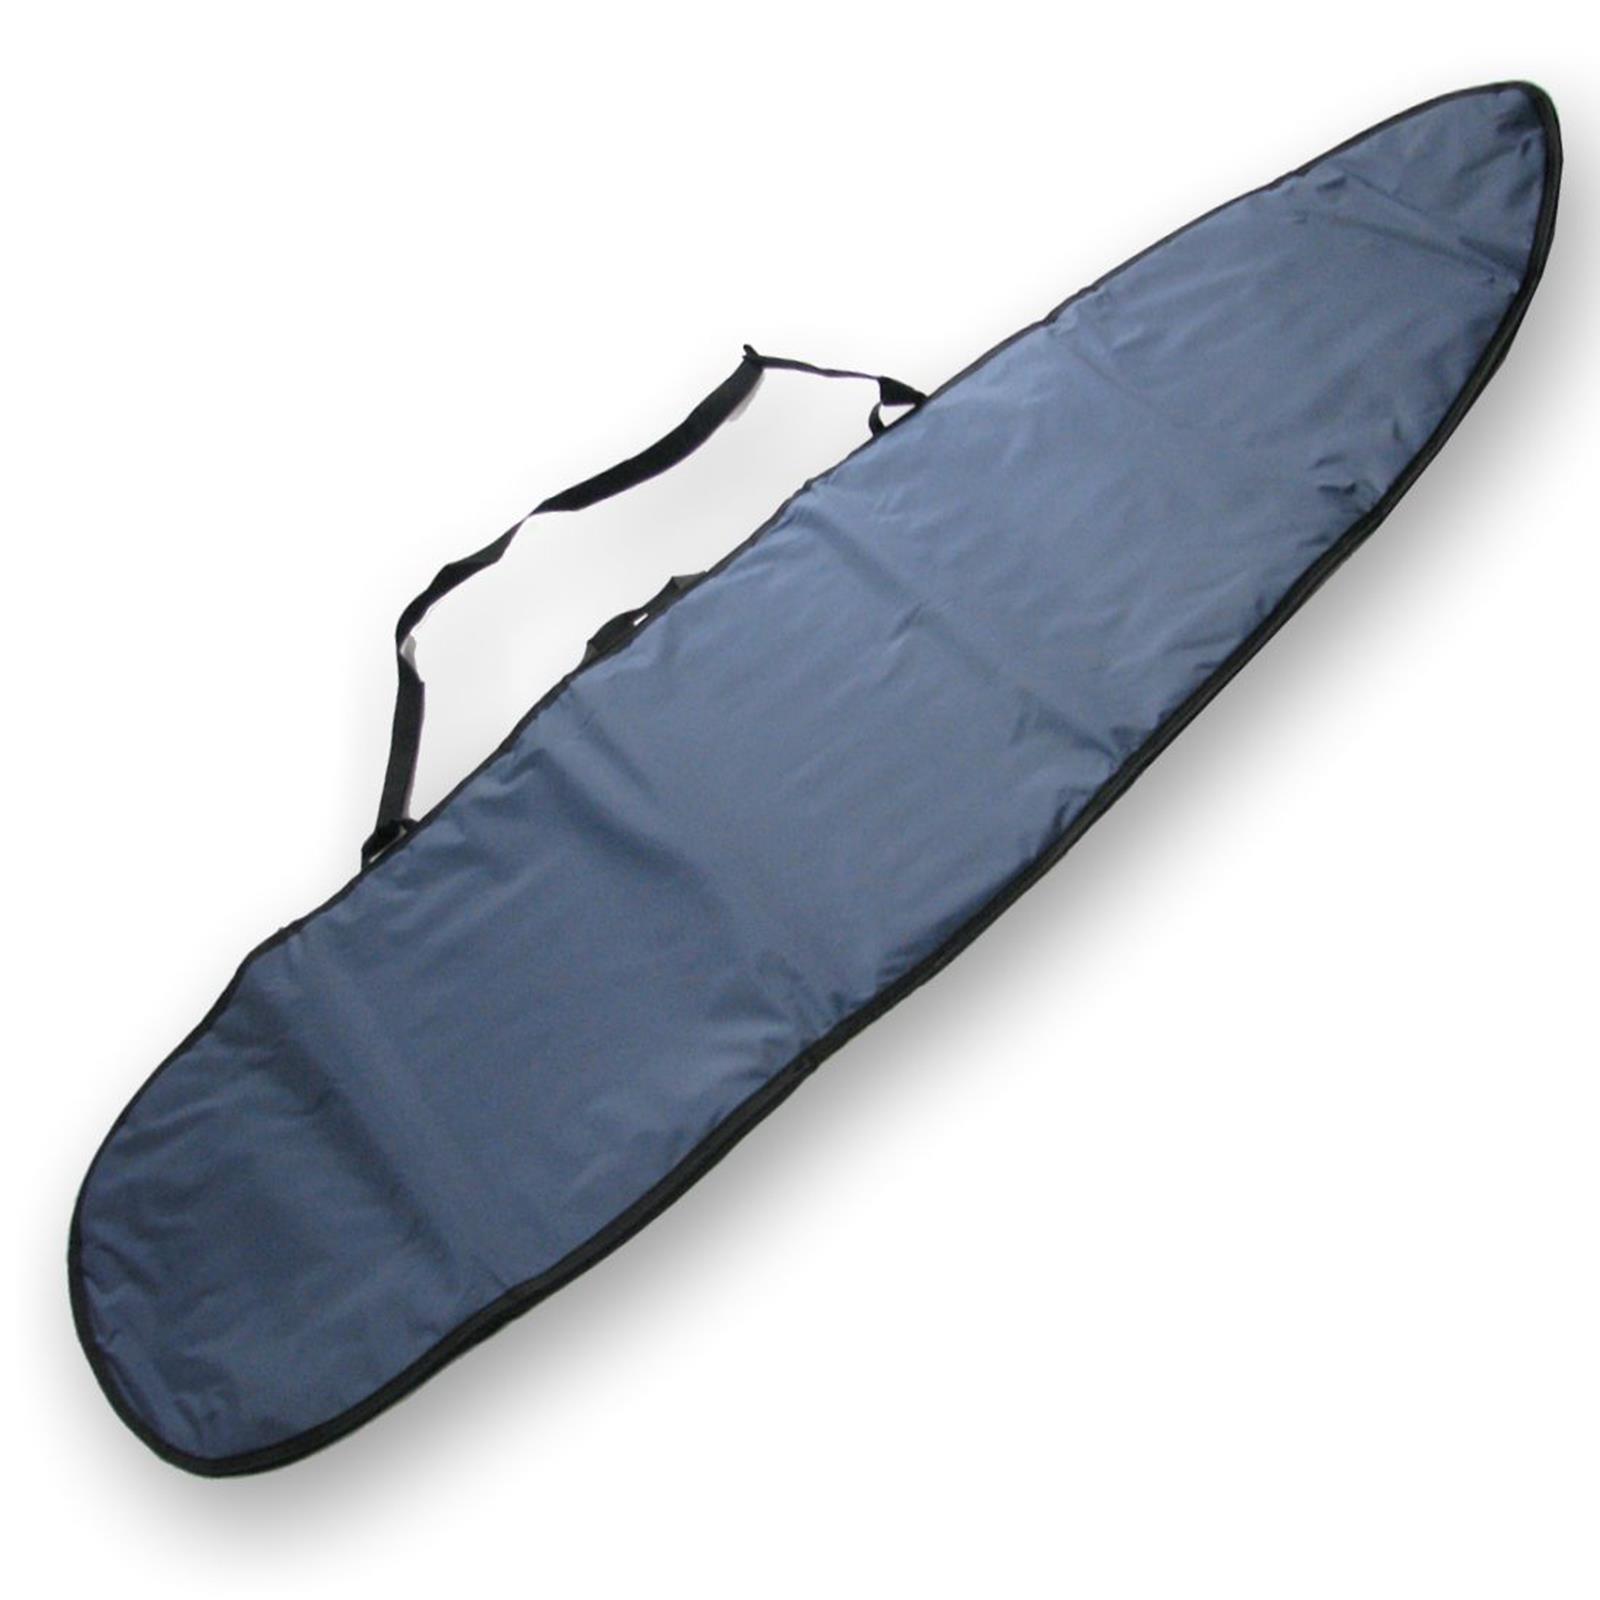 Economy Boardbag 7.0 Surfboard Wellenreiter Tasche